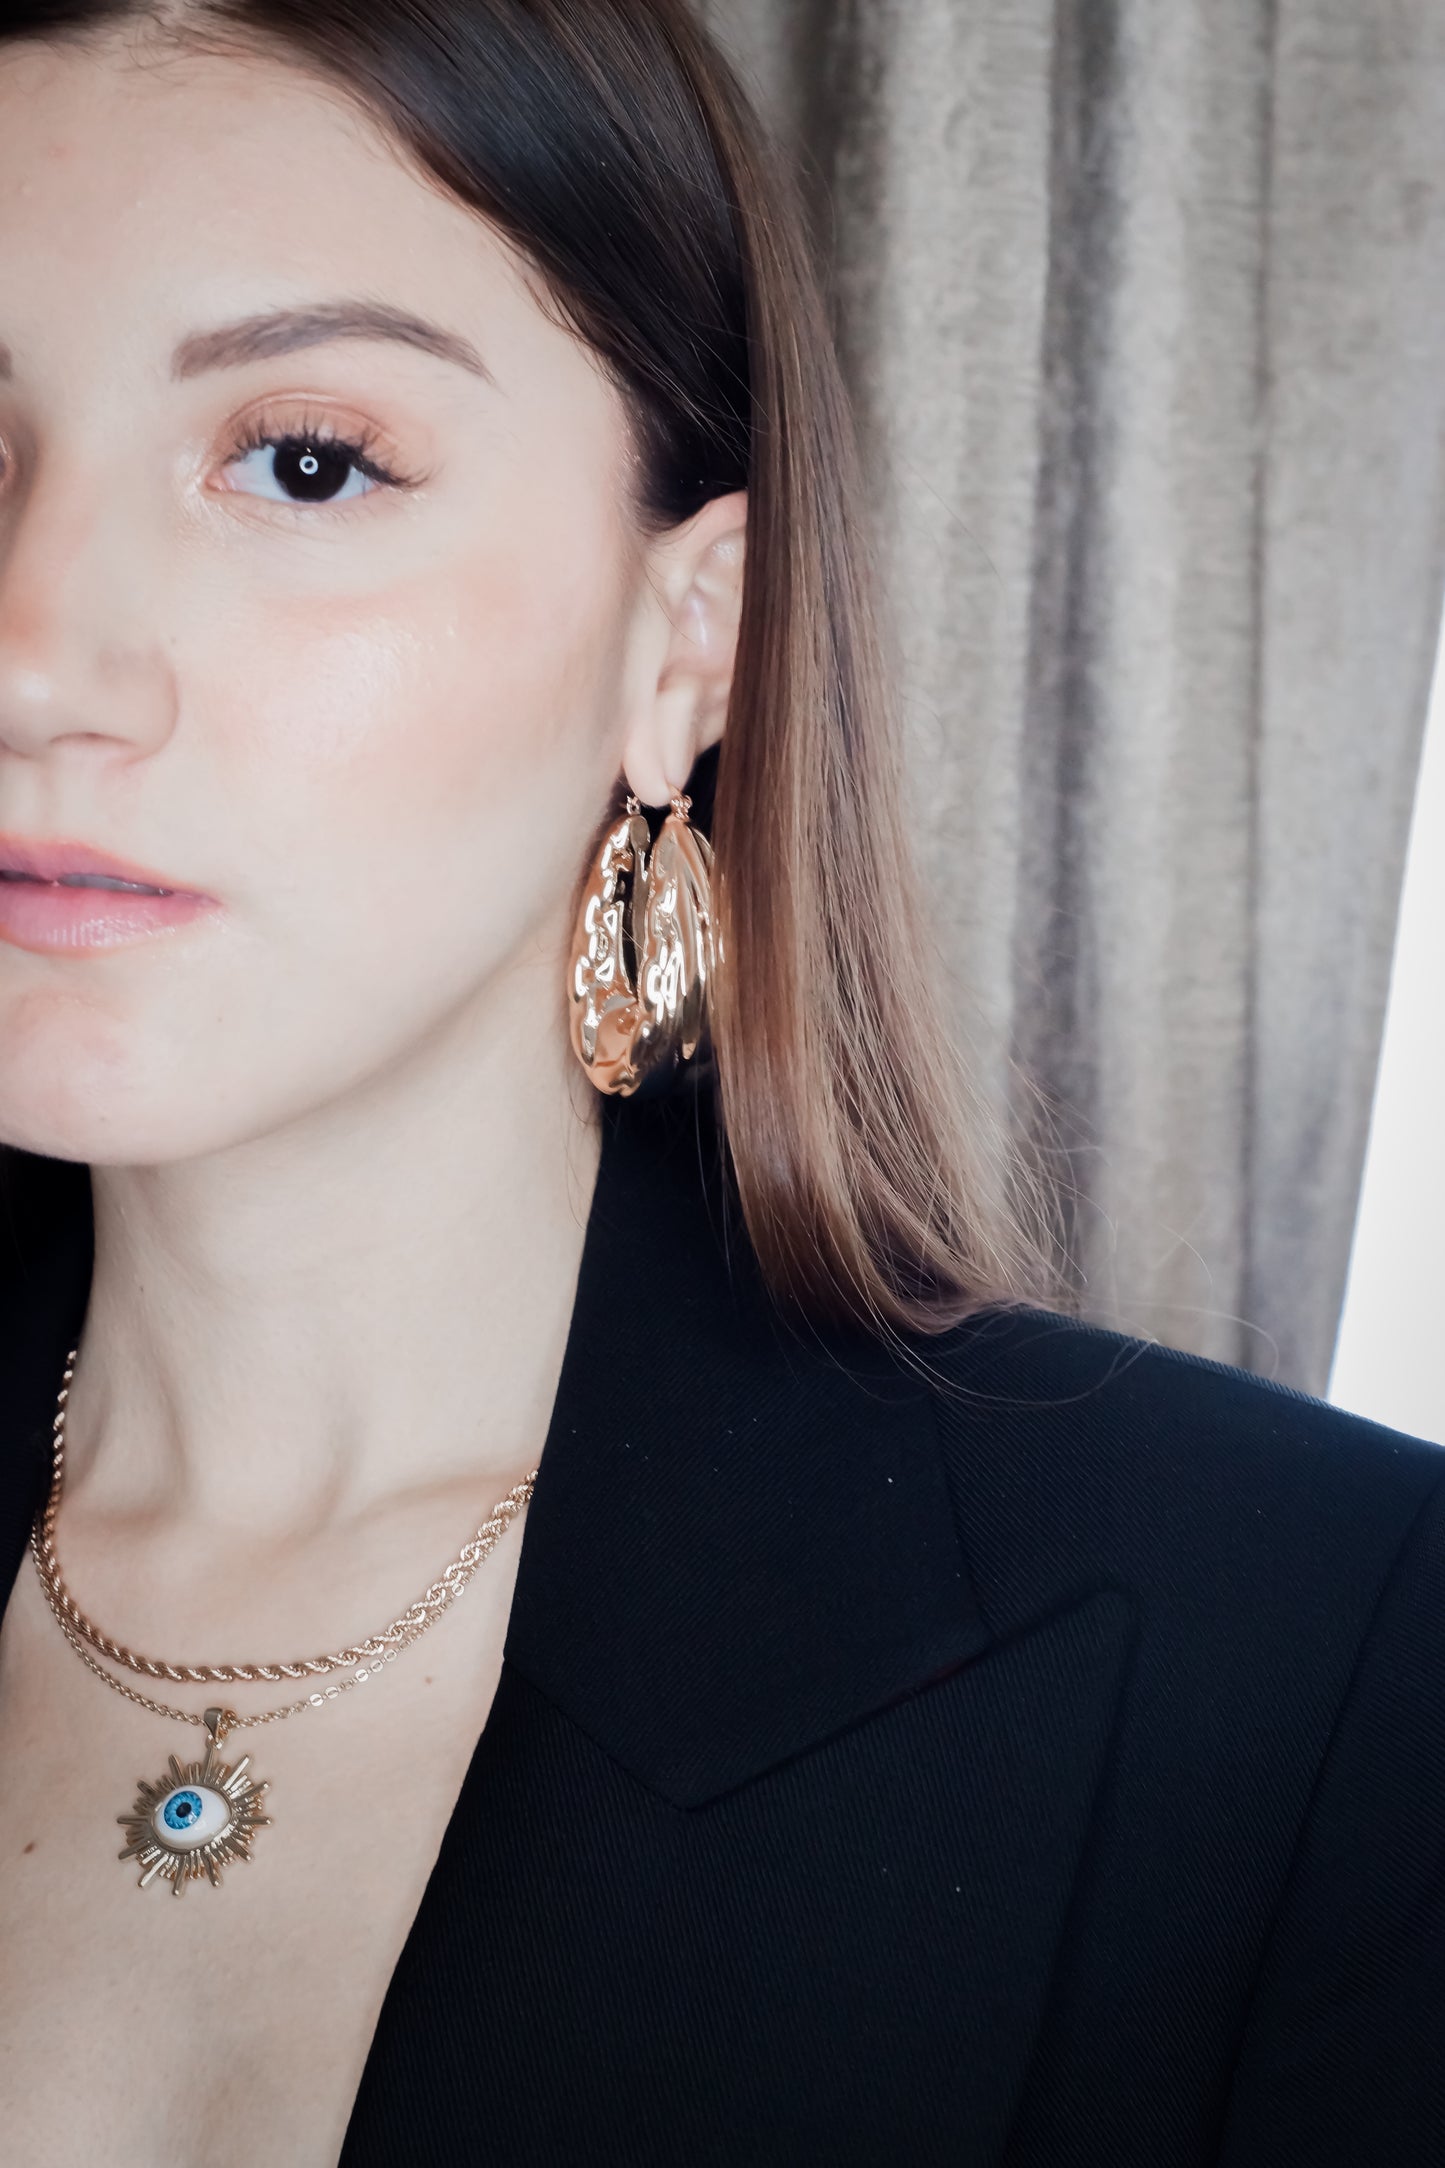 Sofia Concept Earrings